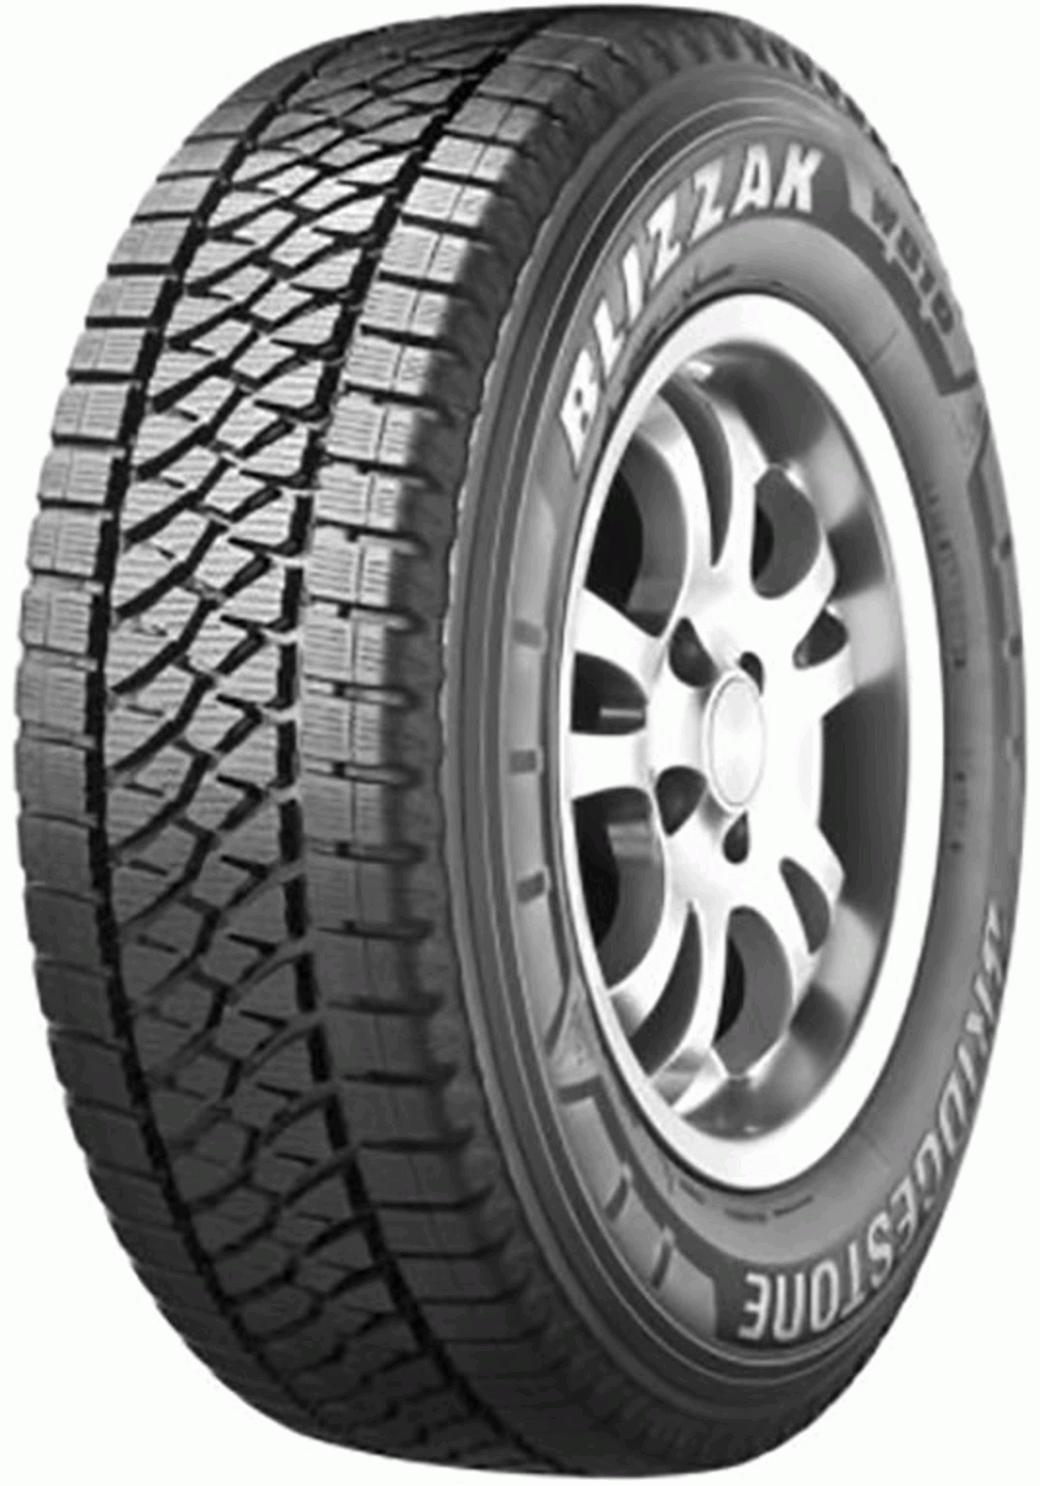 W810 and Blizzak Reviews Tire Tests - Bridgestone